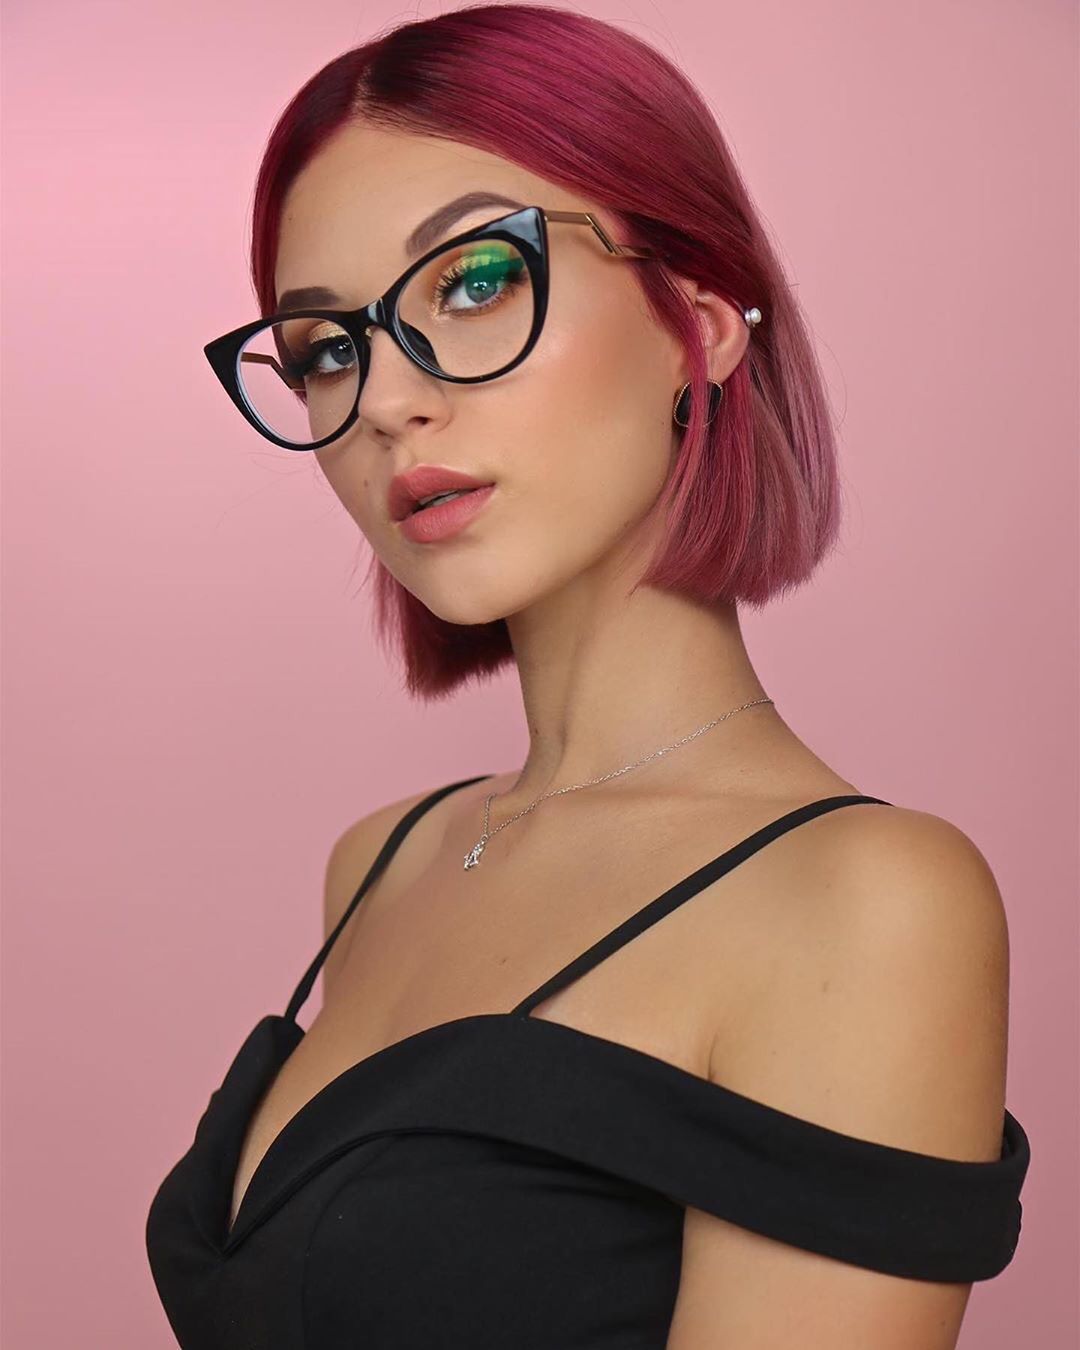 People 1080x1350 Stella Cini model glasses looking at viewer portrait display makeup women straight hair pink hair